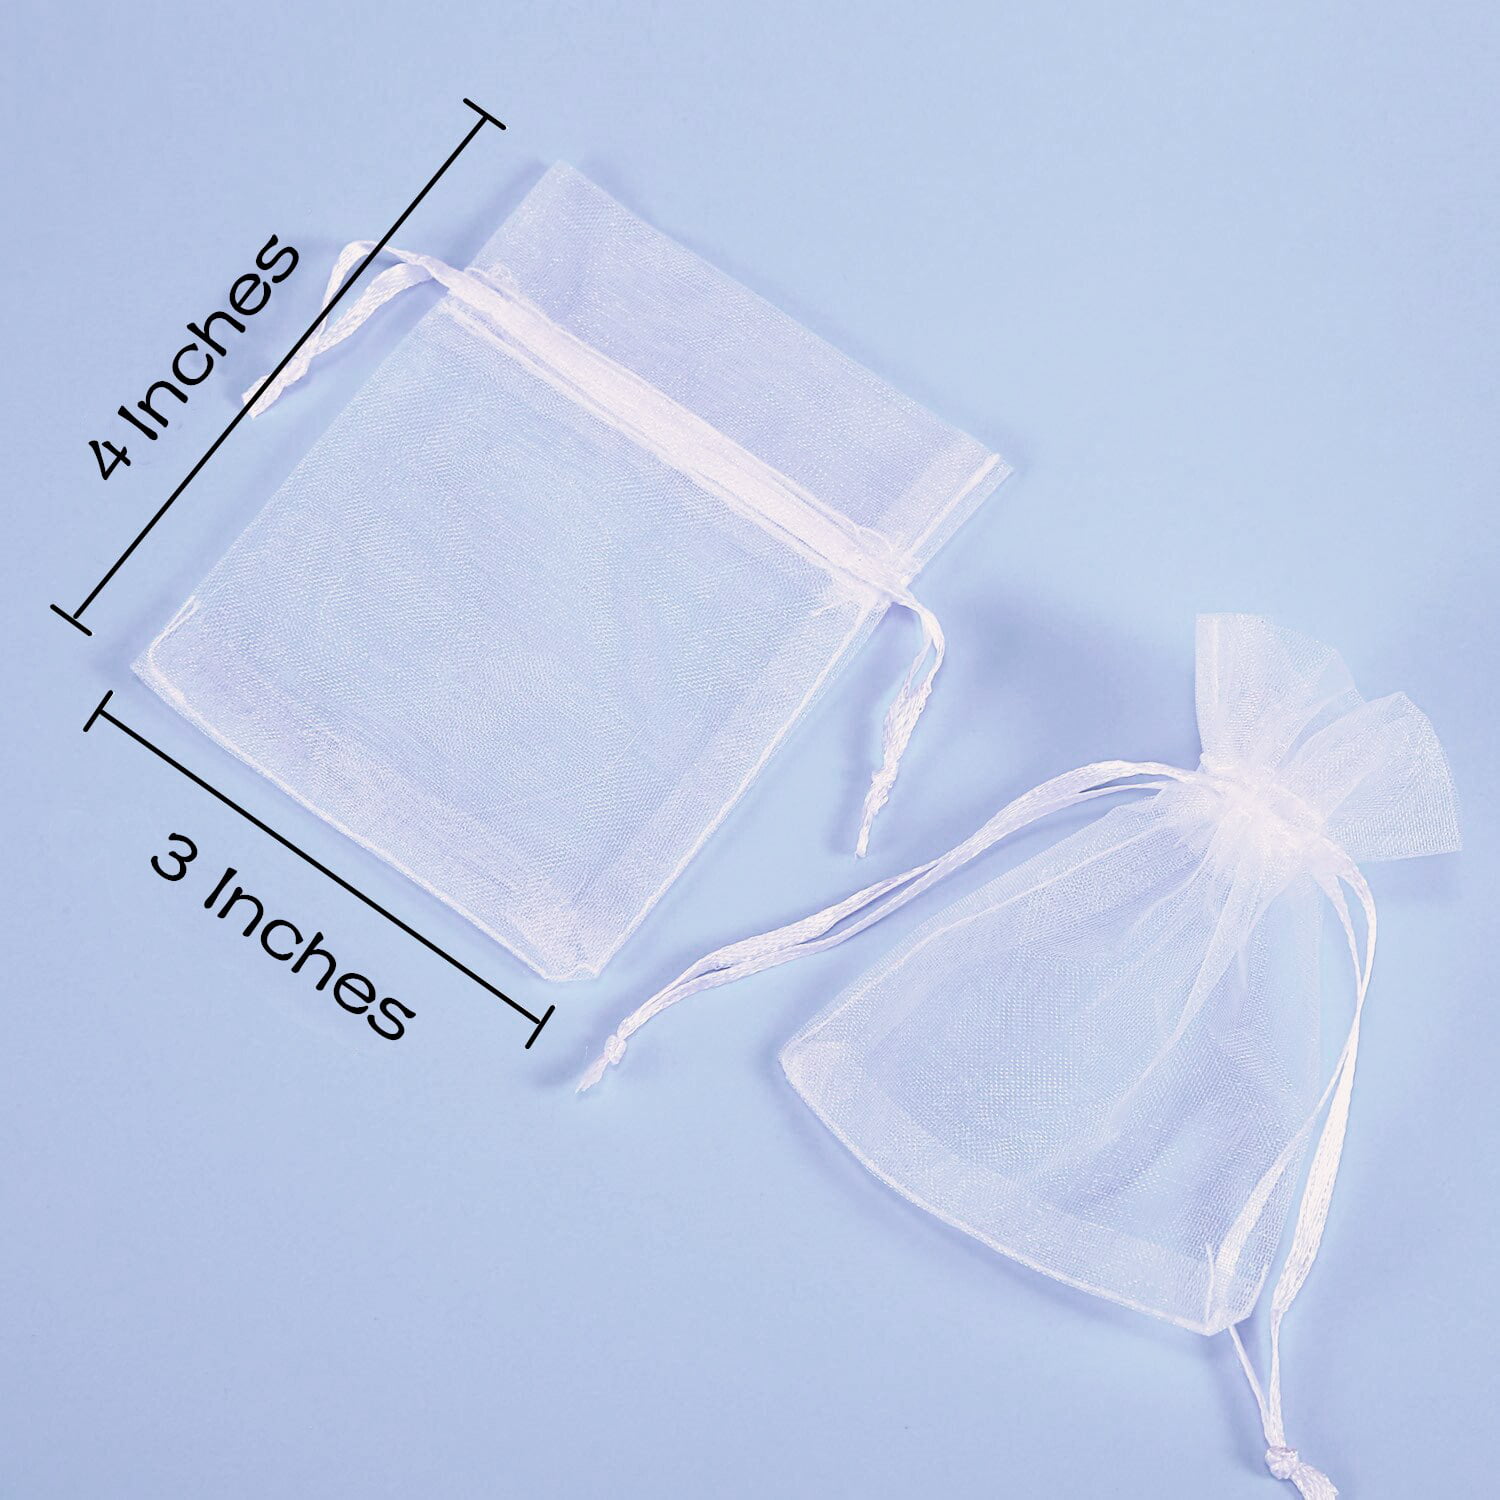  jojofuny 100pcs organza bags wedding candy bags small